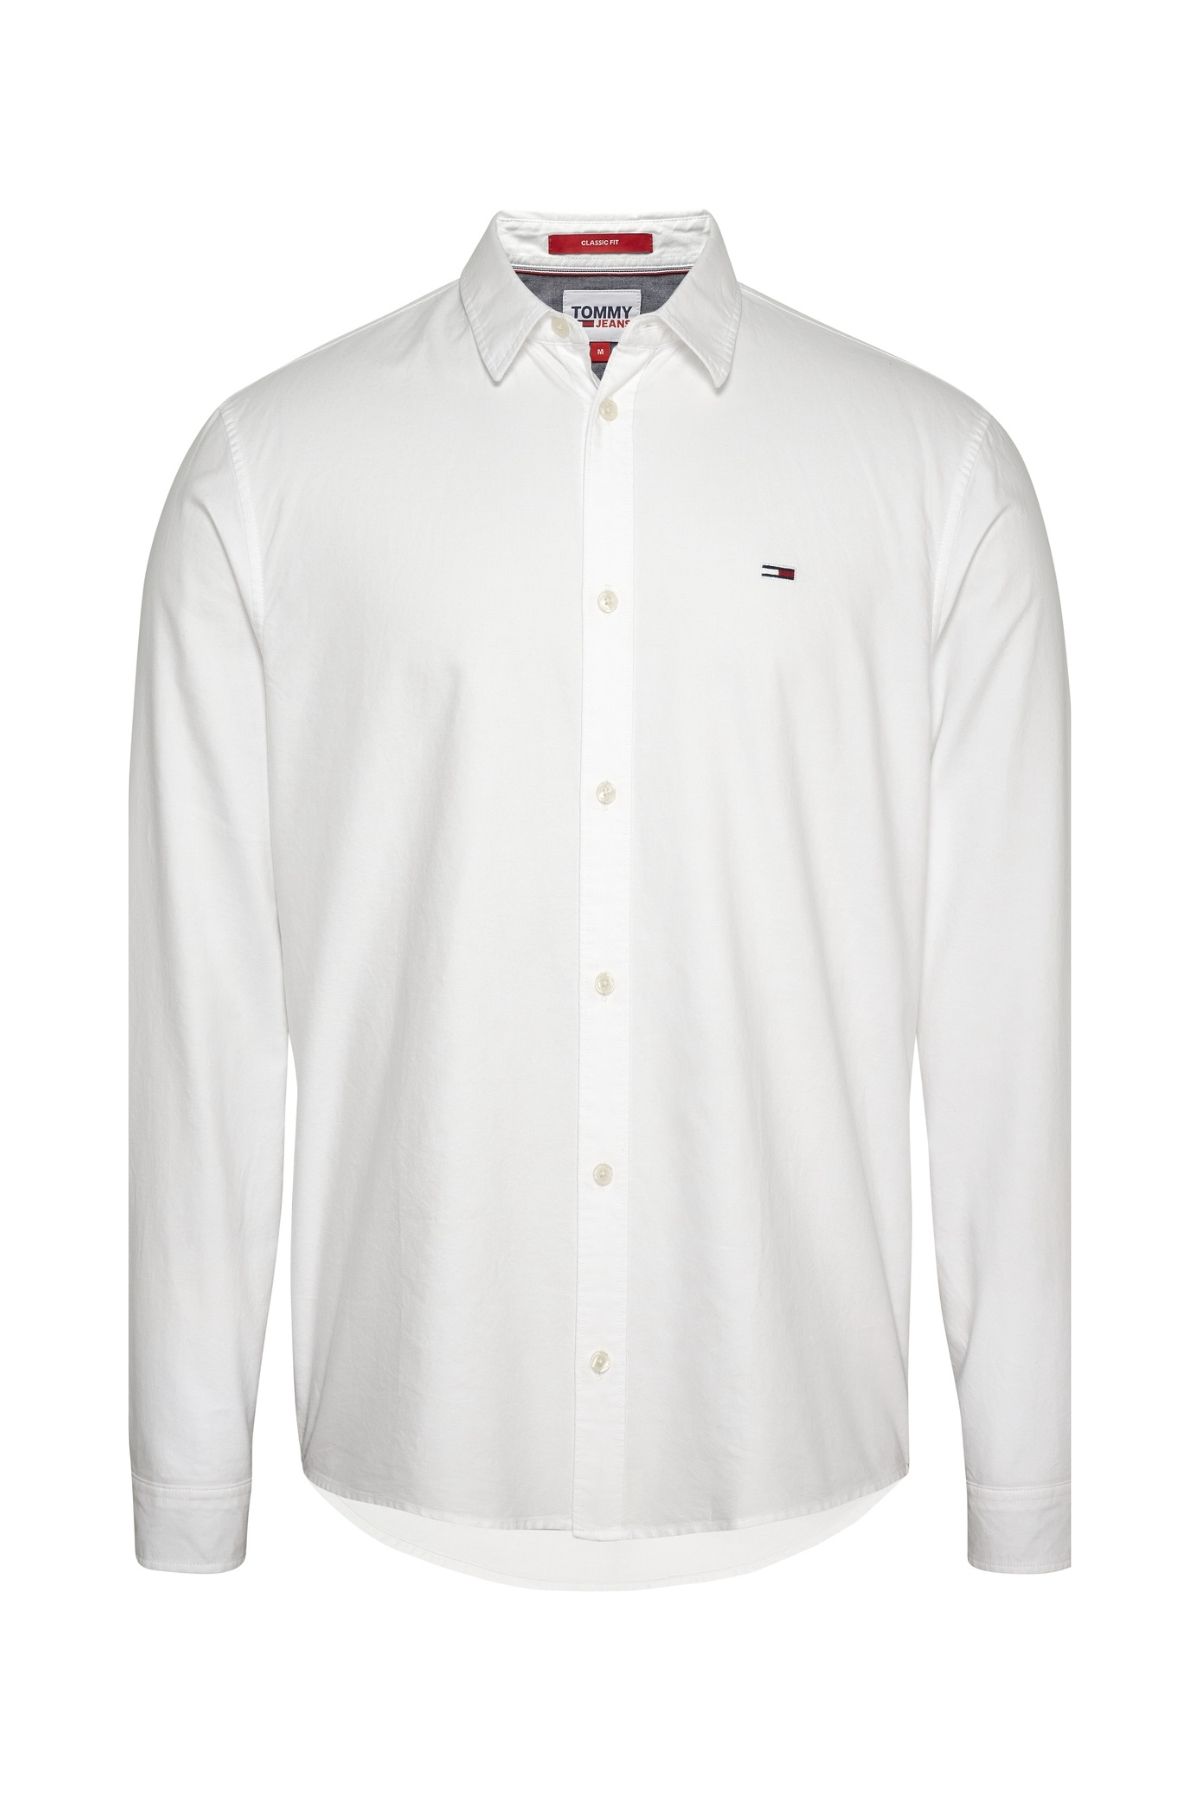 Tommy Hilfiger Tjm Classic Oxford Shirt